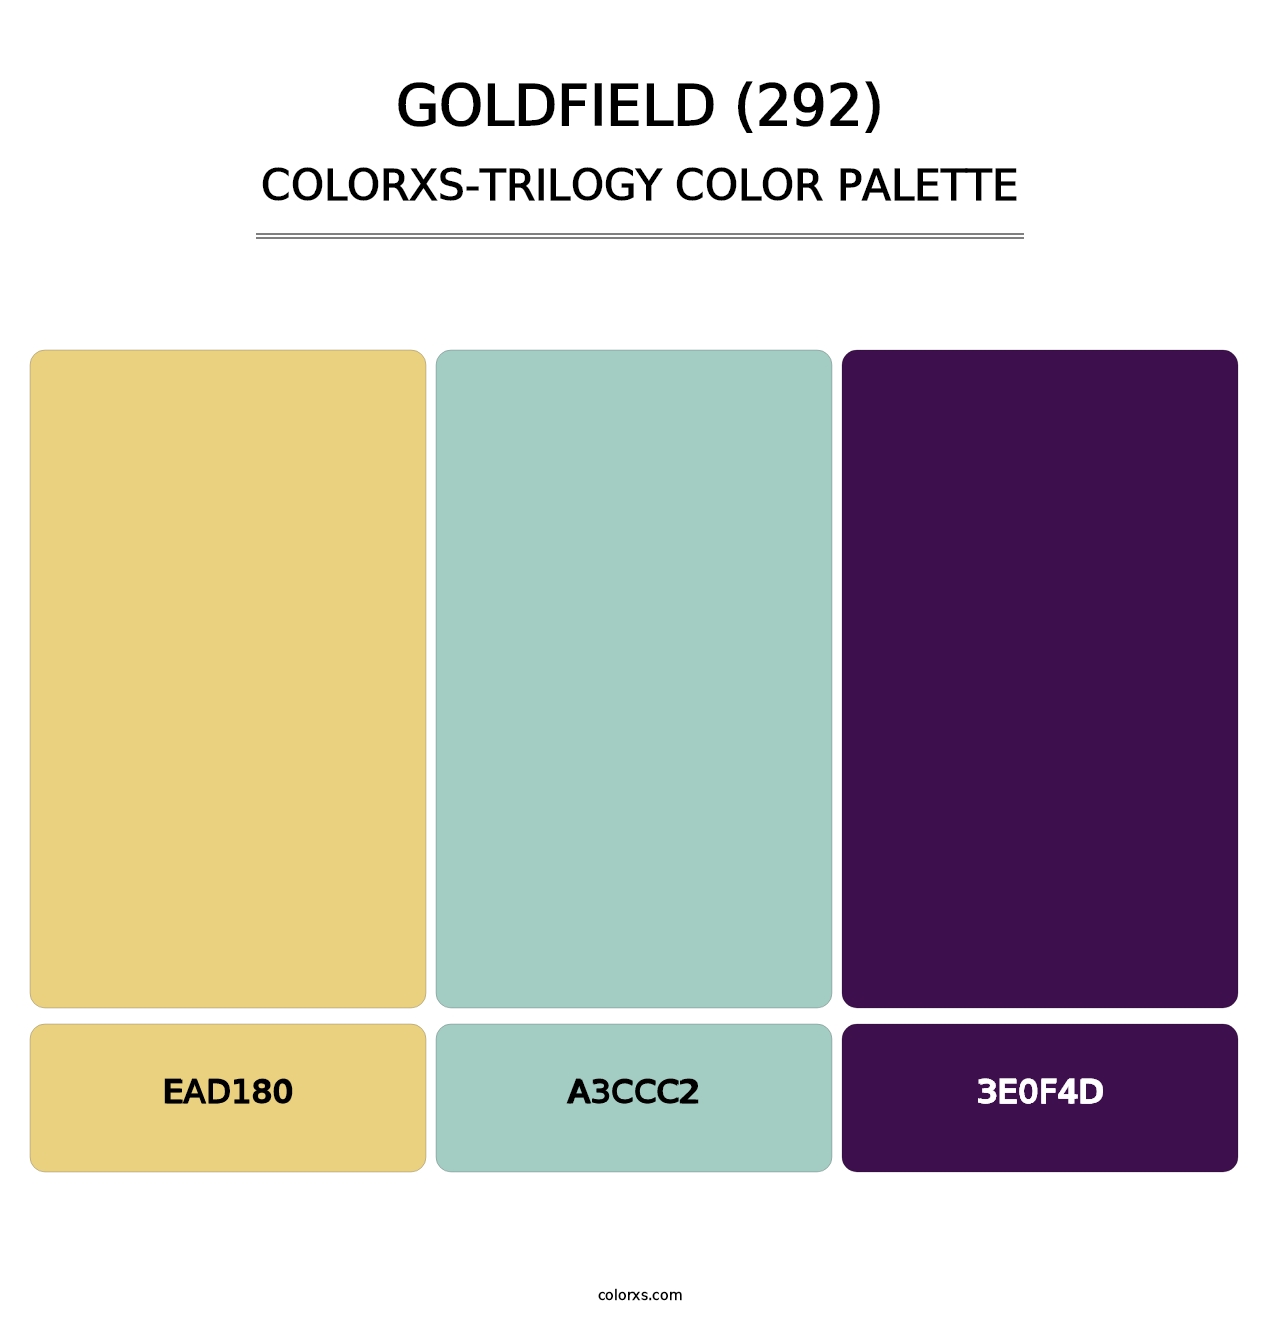 Goldfield (292) - Colorxs Trilogy Palette